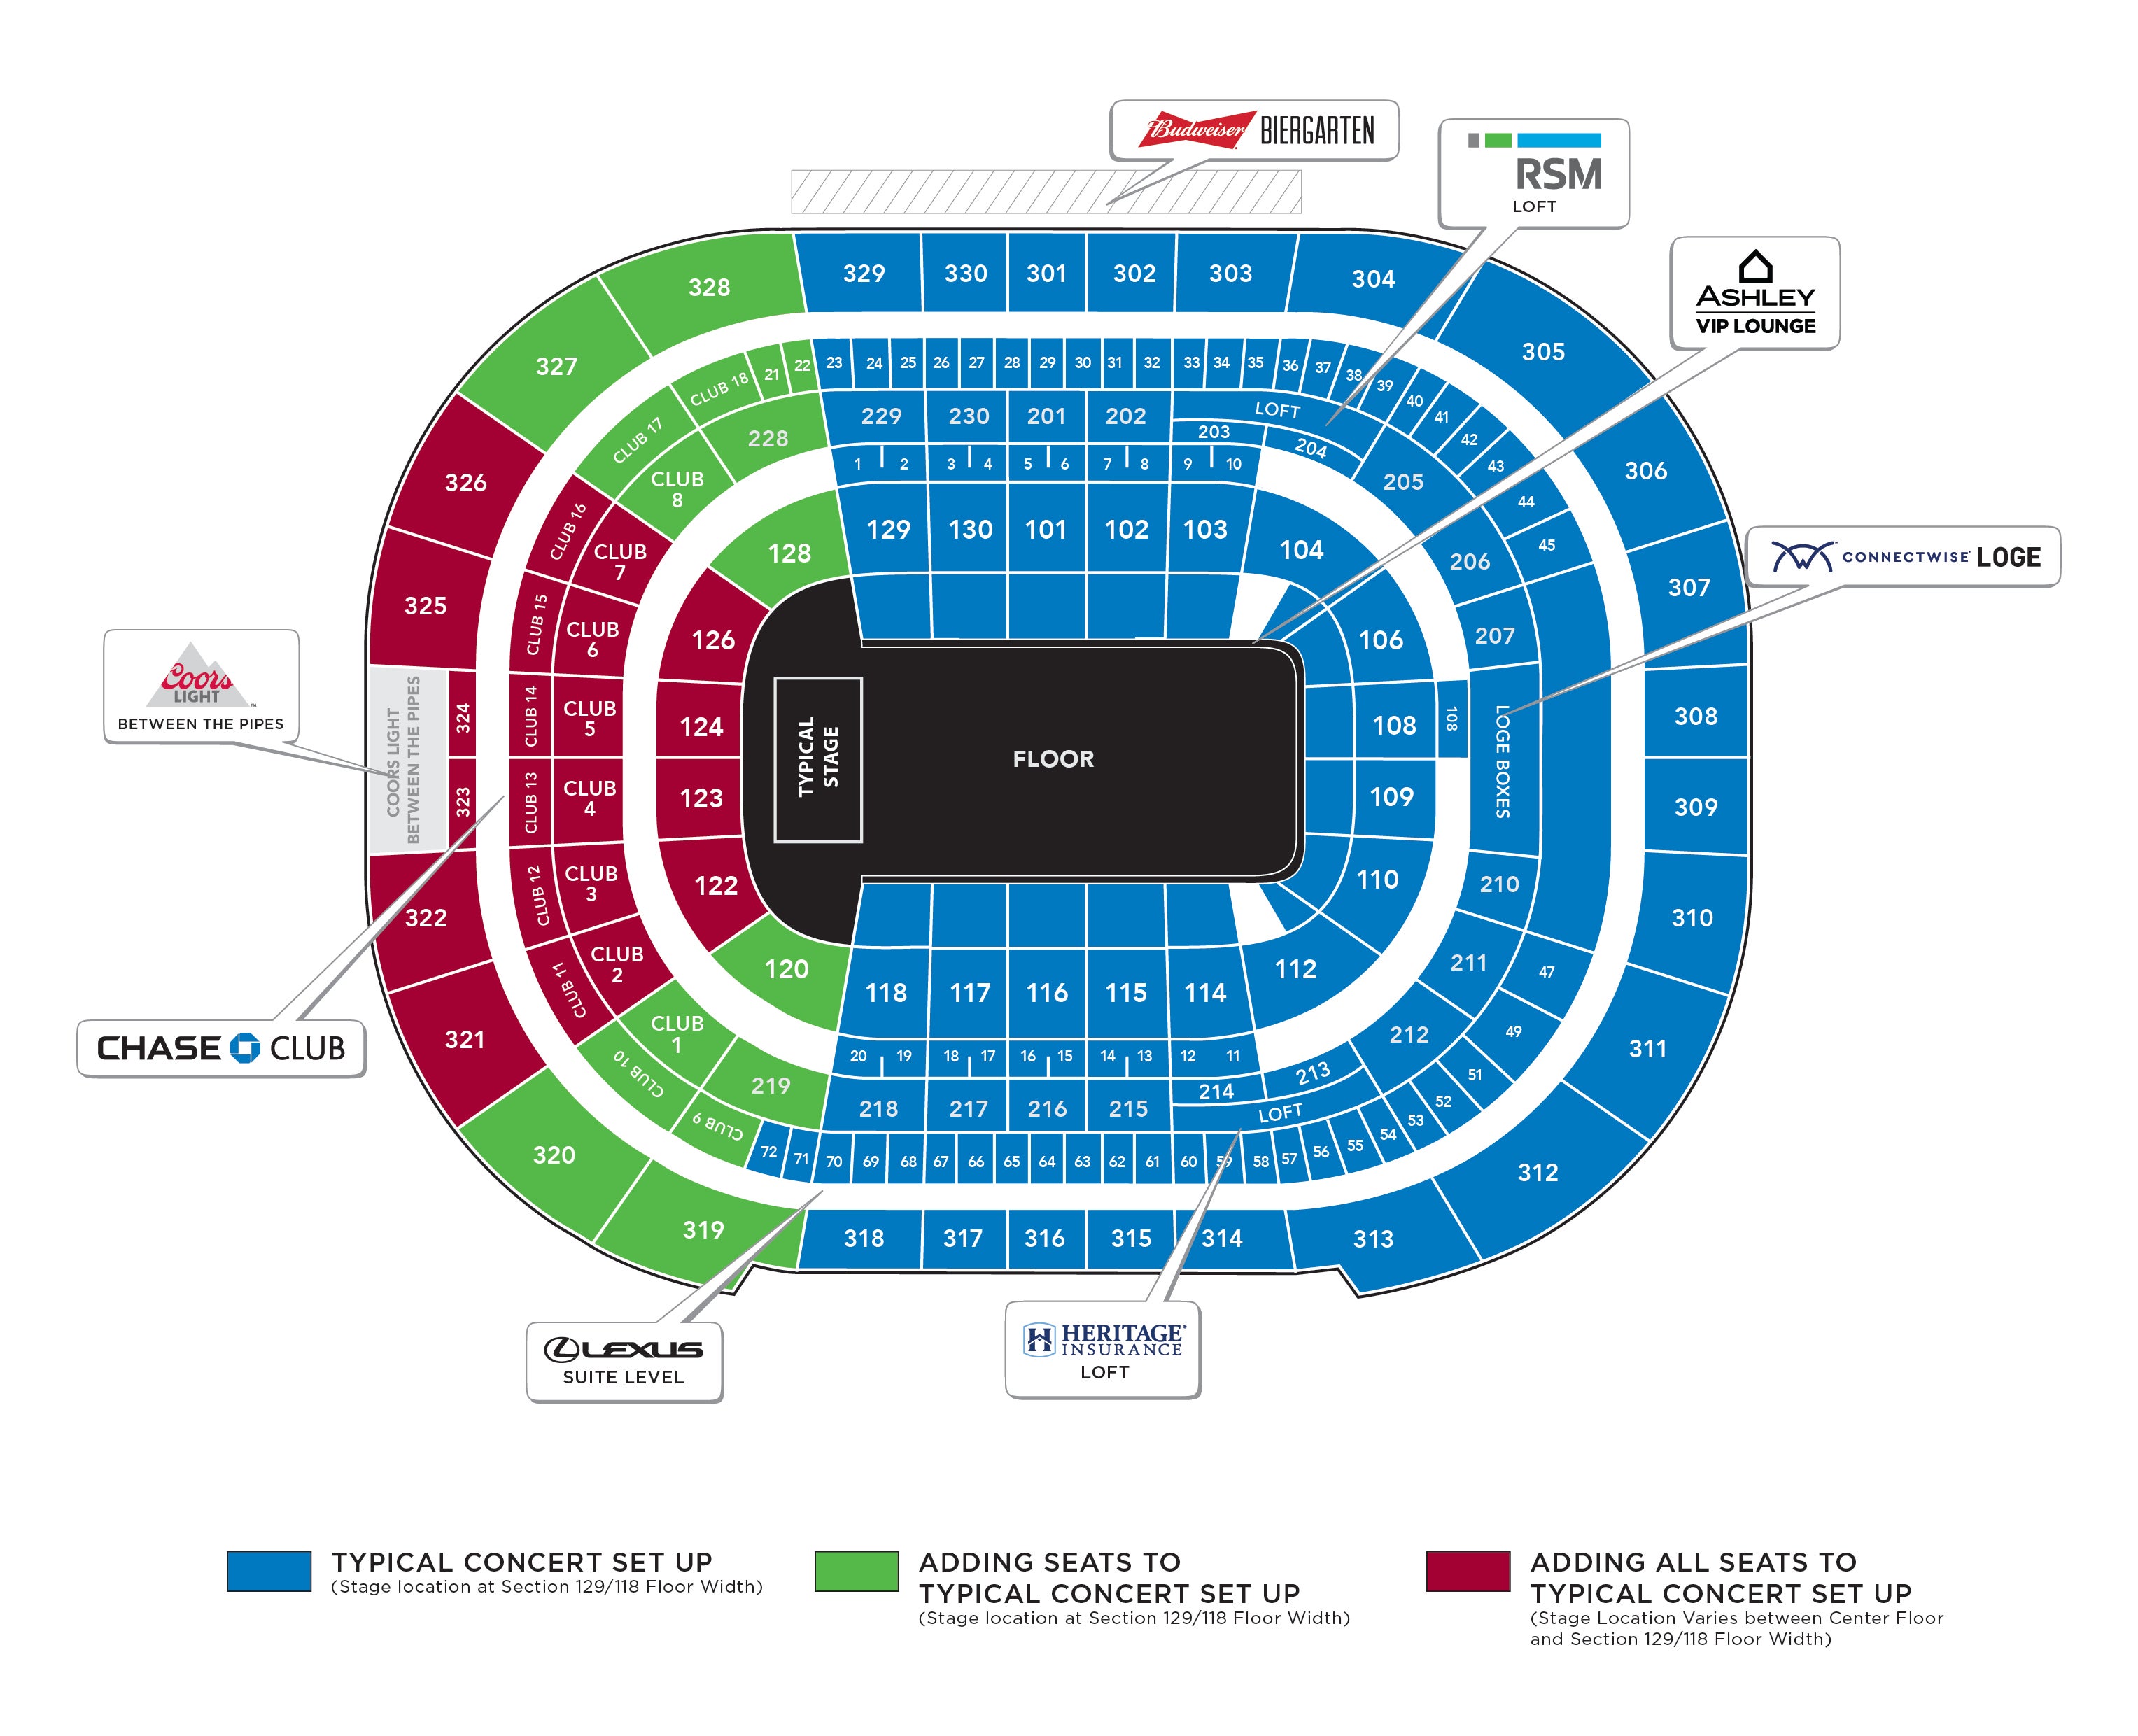 Amalie Arena Seating Charts 